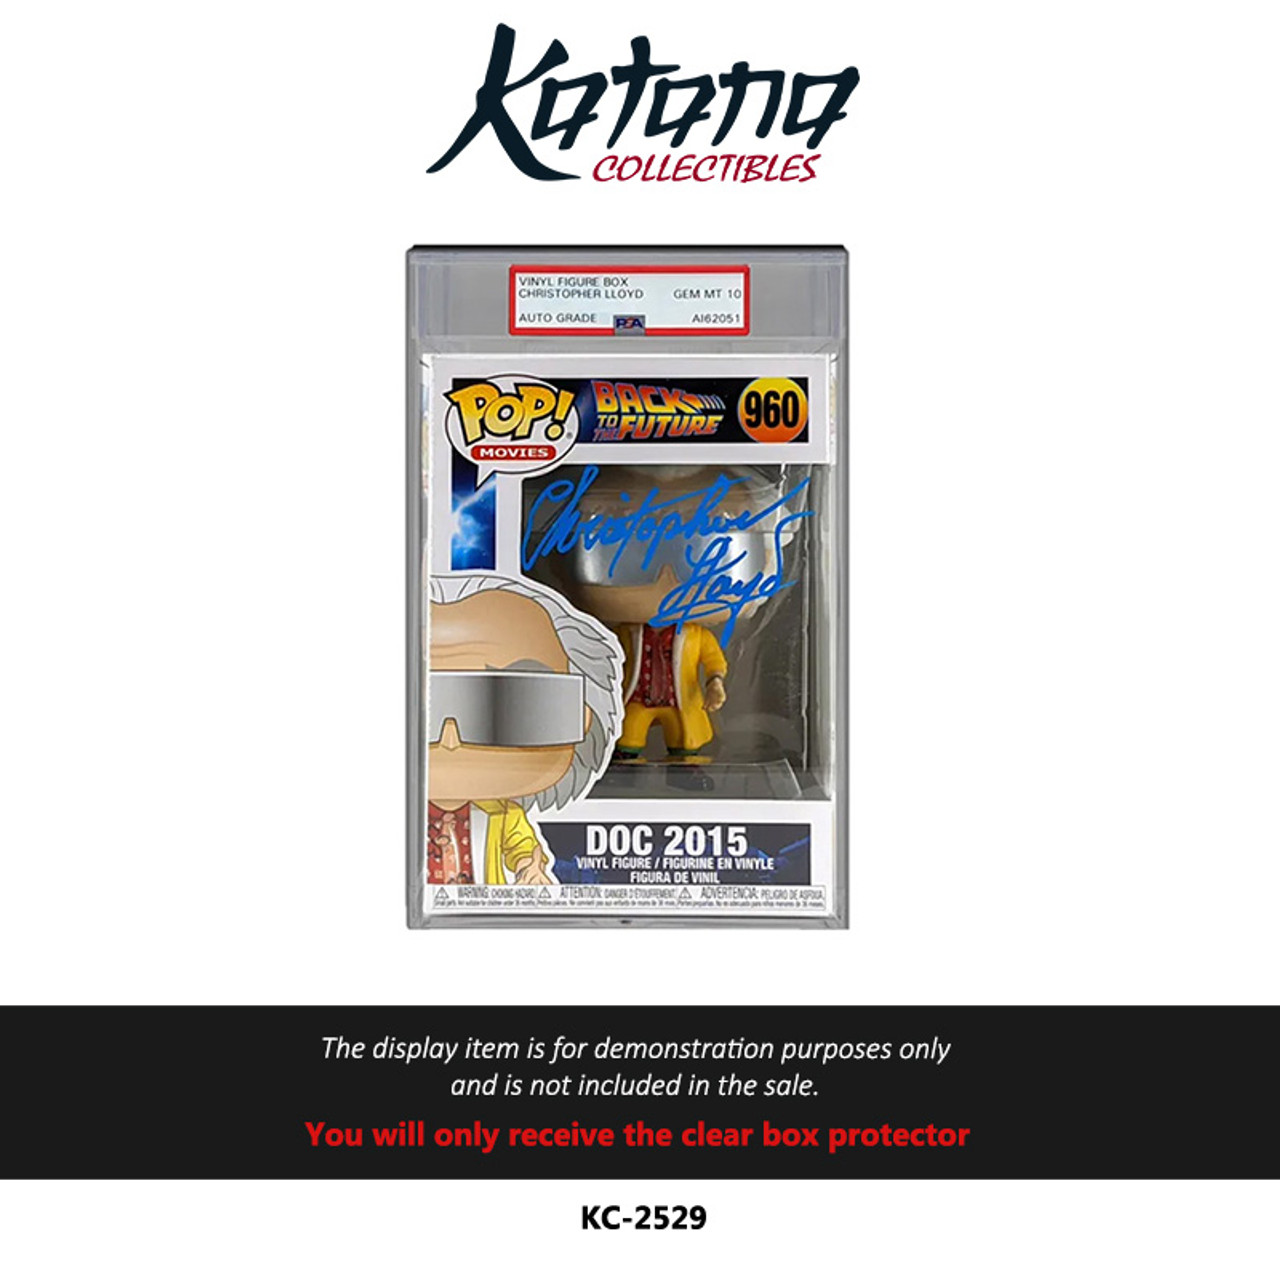 Katana Collectibles Protector For PSA Graded Encapsulated Pop!